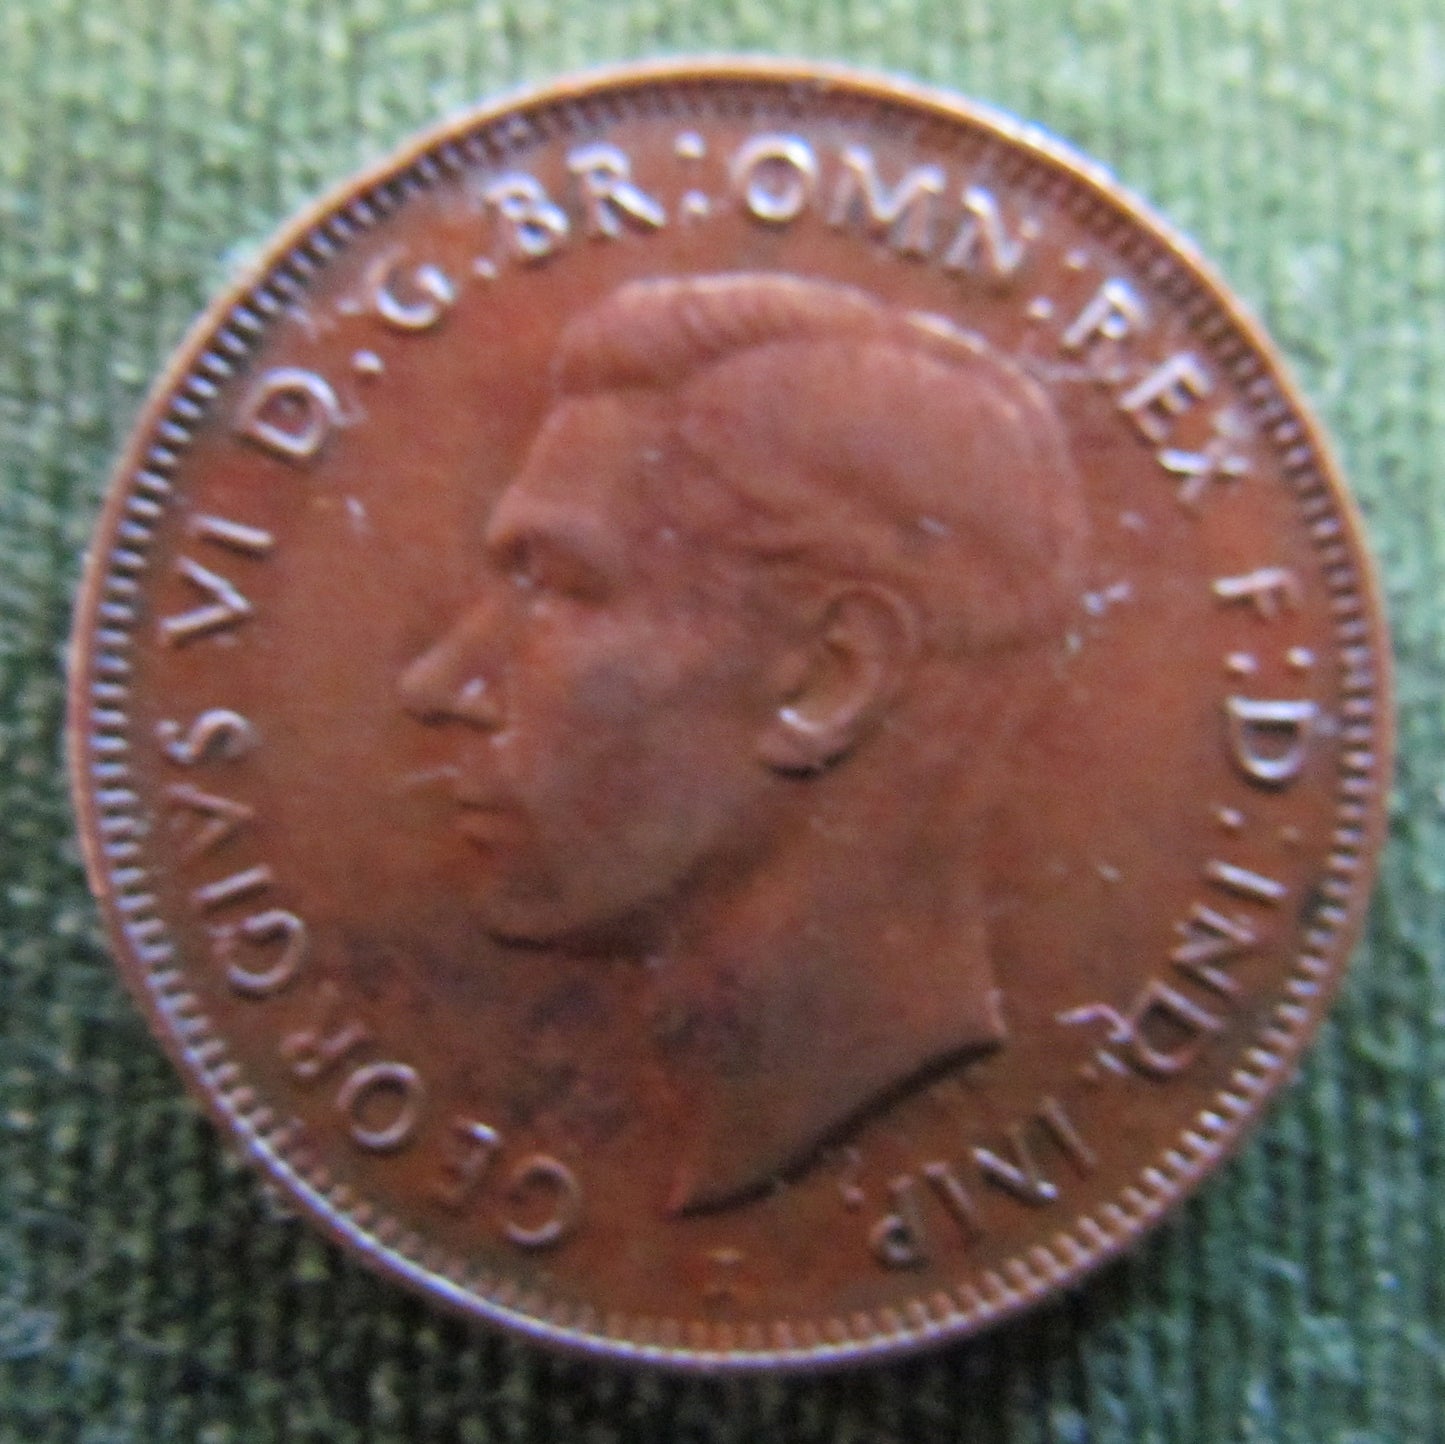 Australian 1942 I 1/2d Half Penny King George VI Coin - Variety Lamination Error